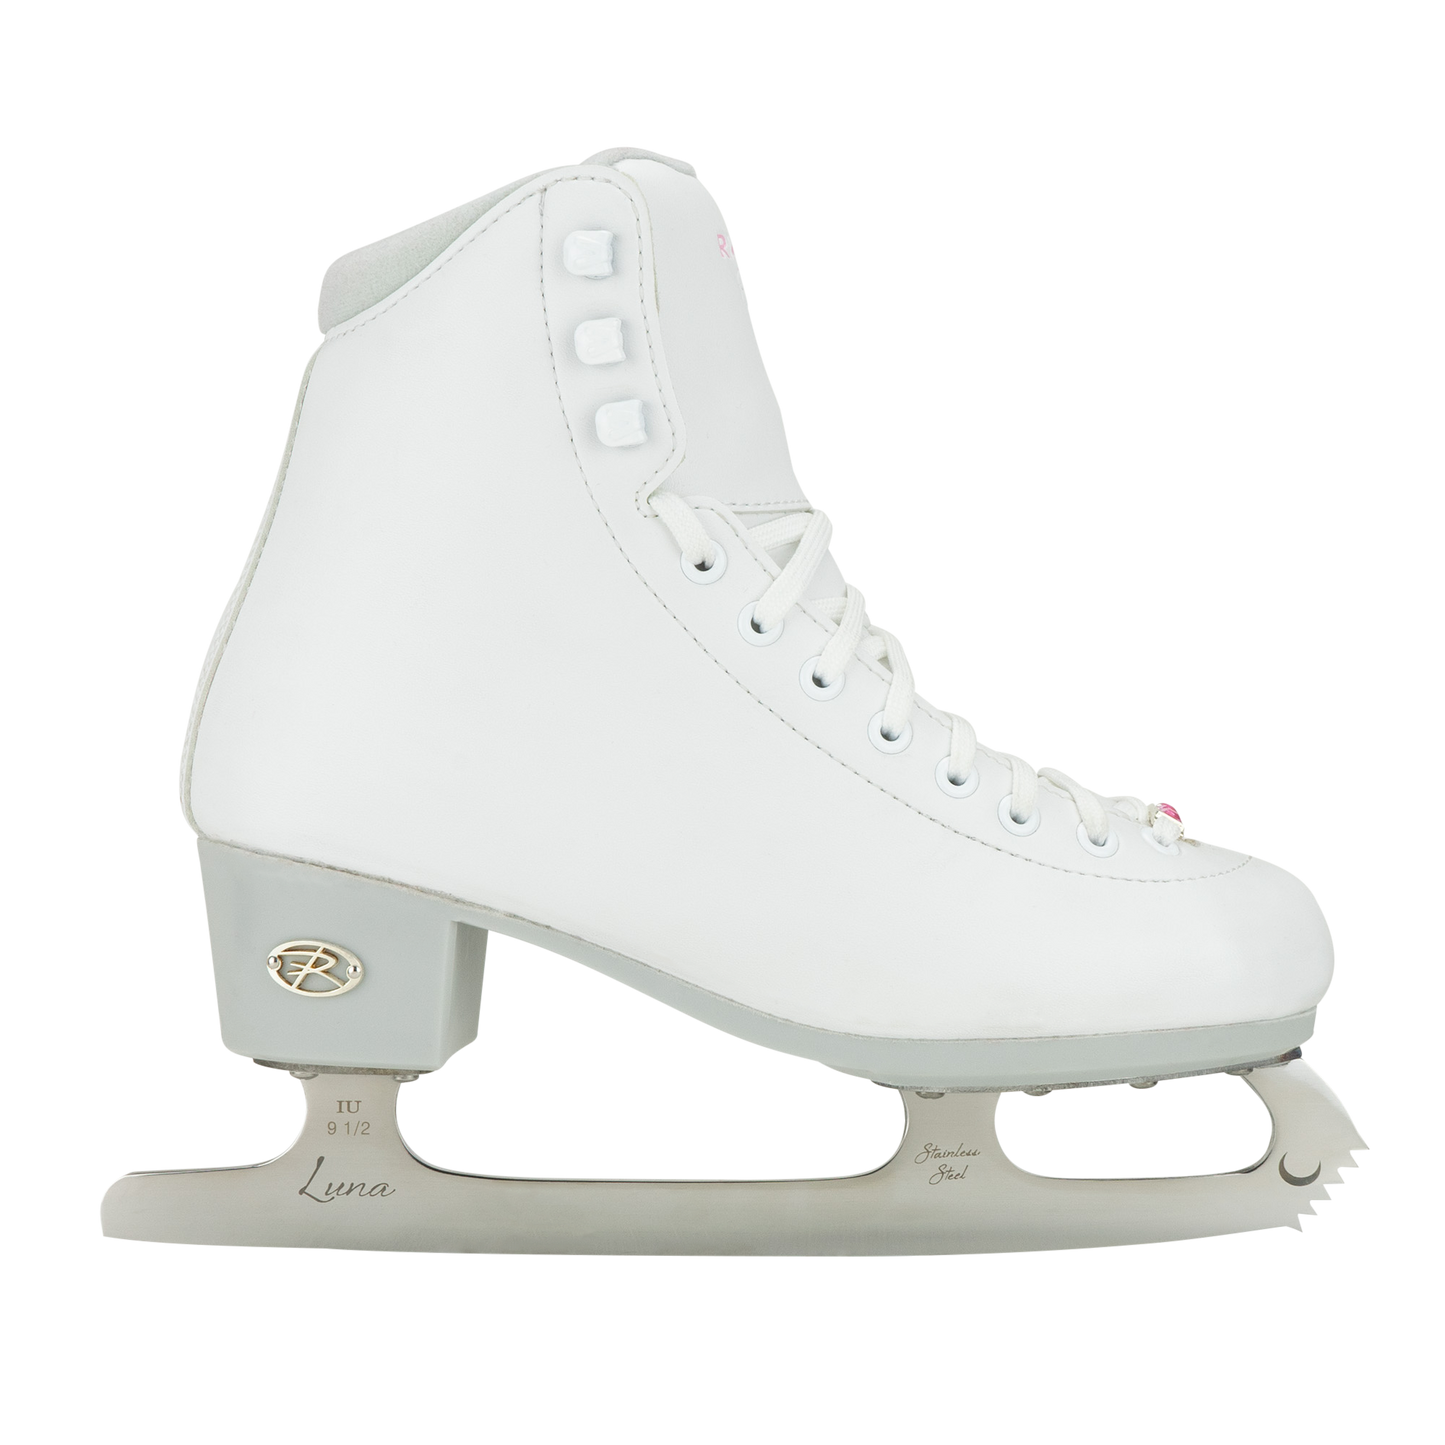 New for 2023! Riedell Ruby Skating Skills Figure Skate